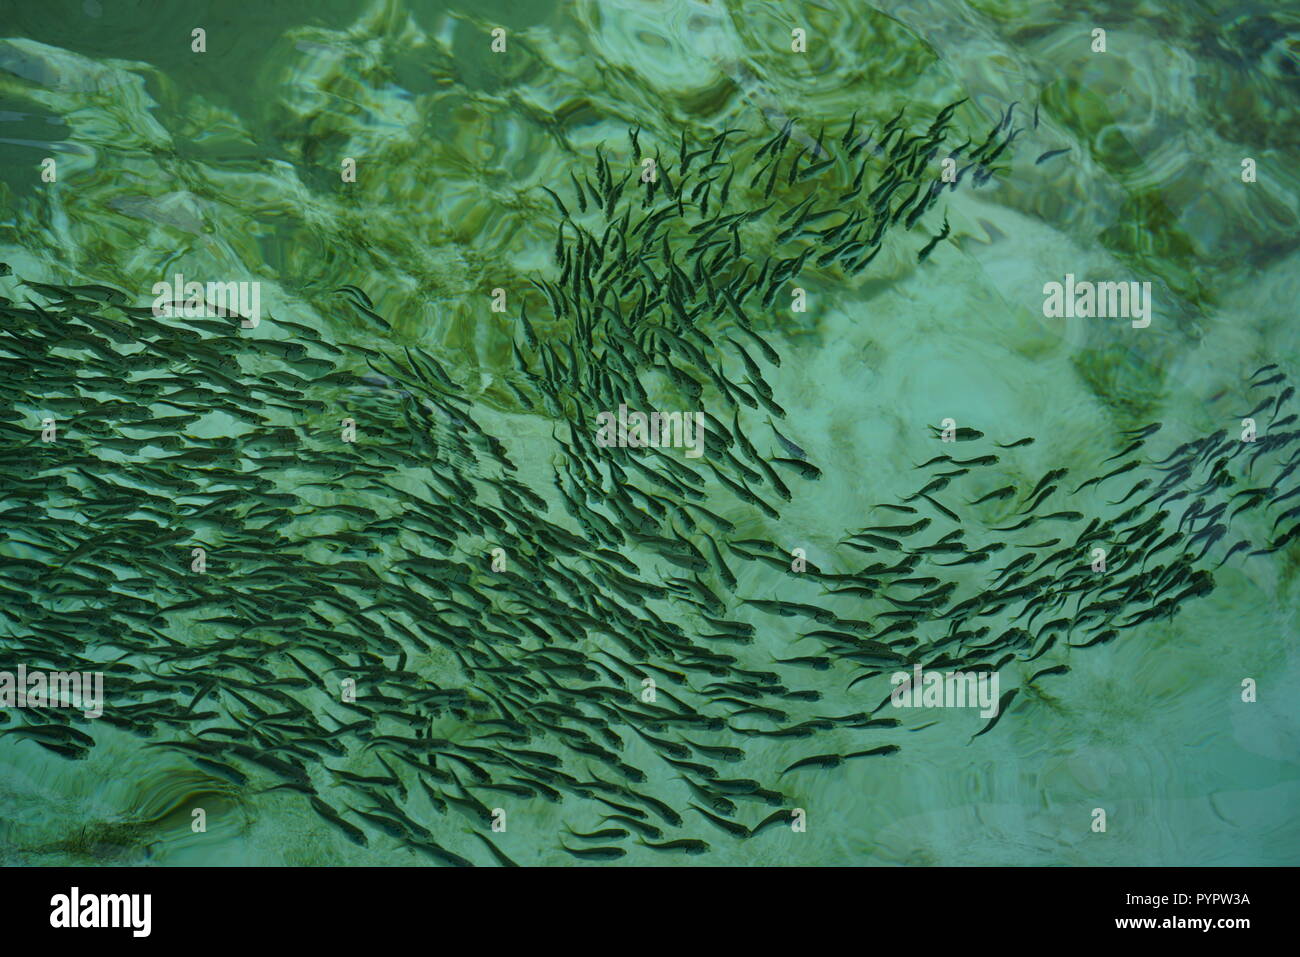 School of fish Stock Photo